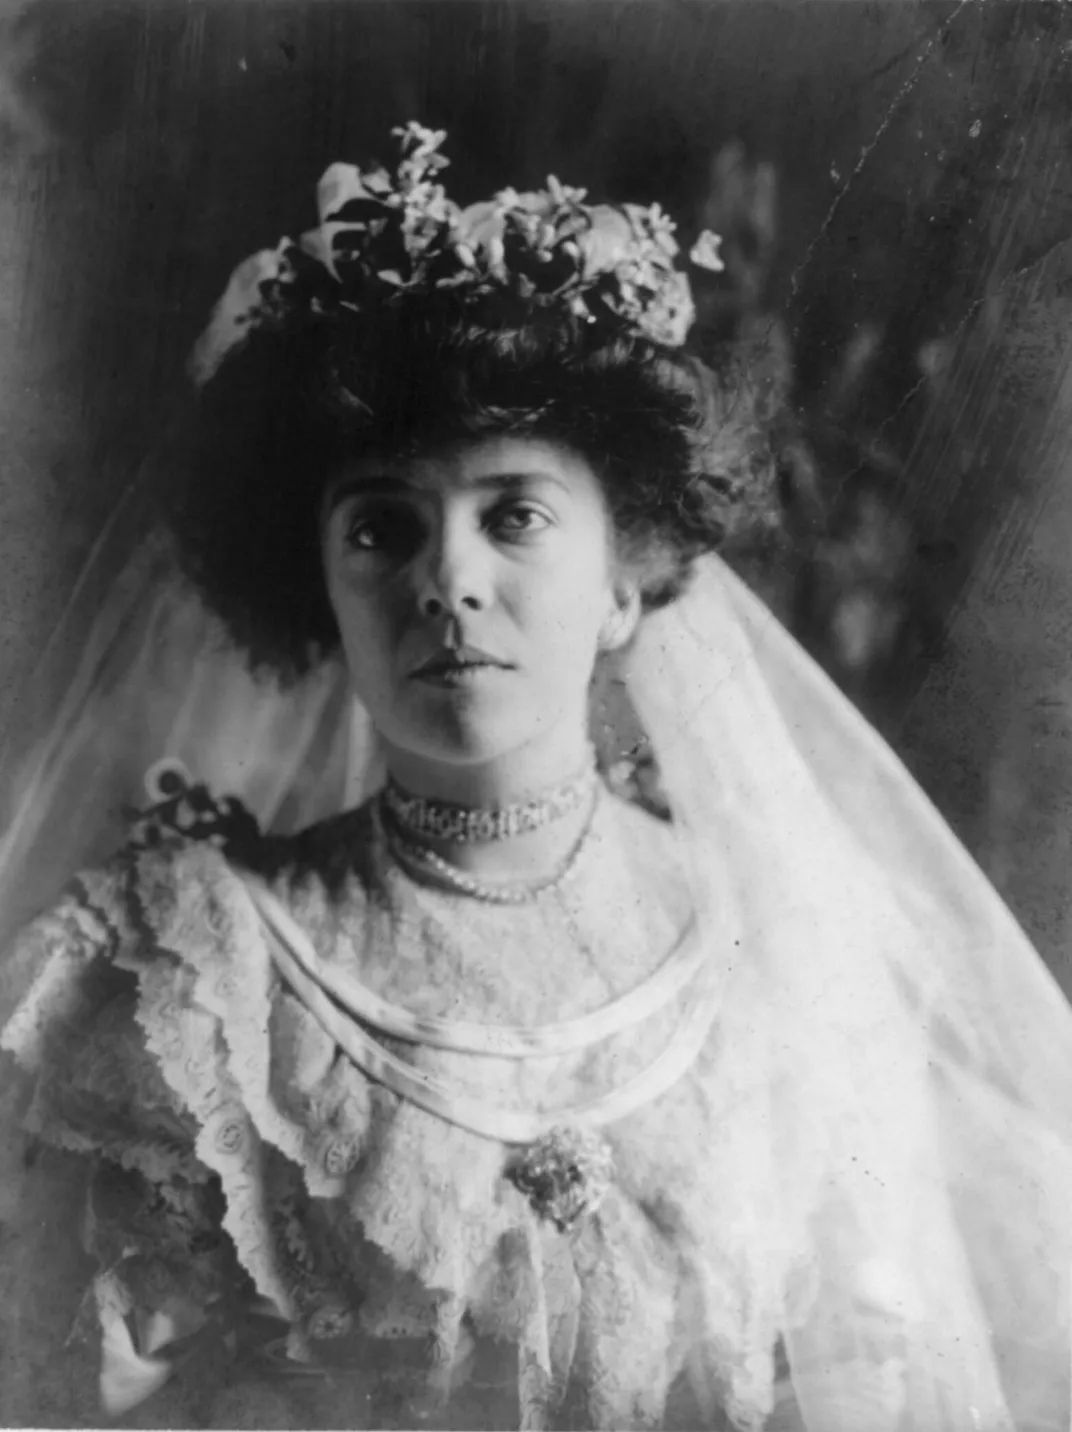 Alice Roosevelt in her wedding dress